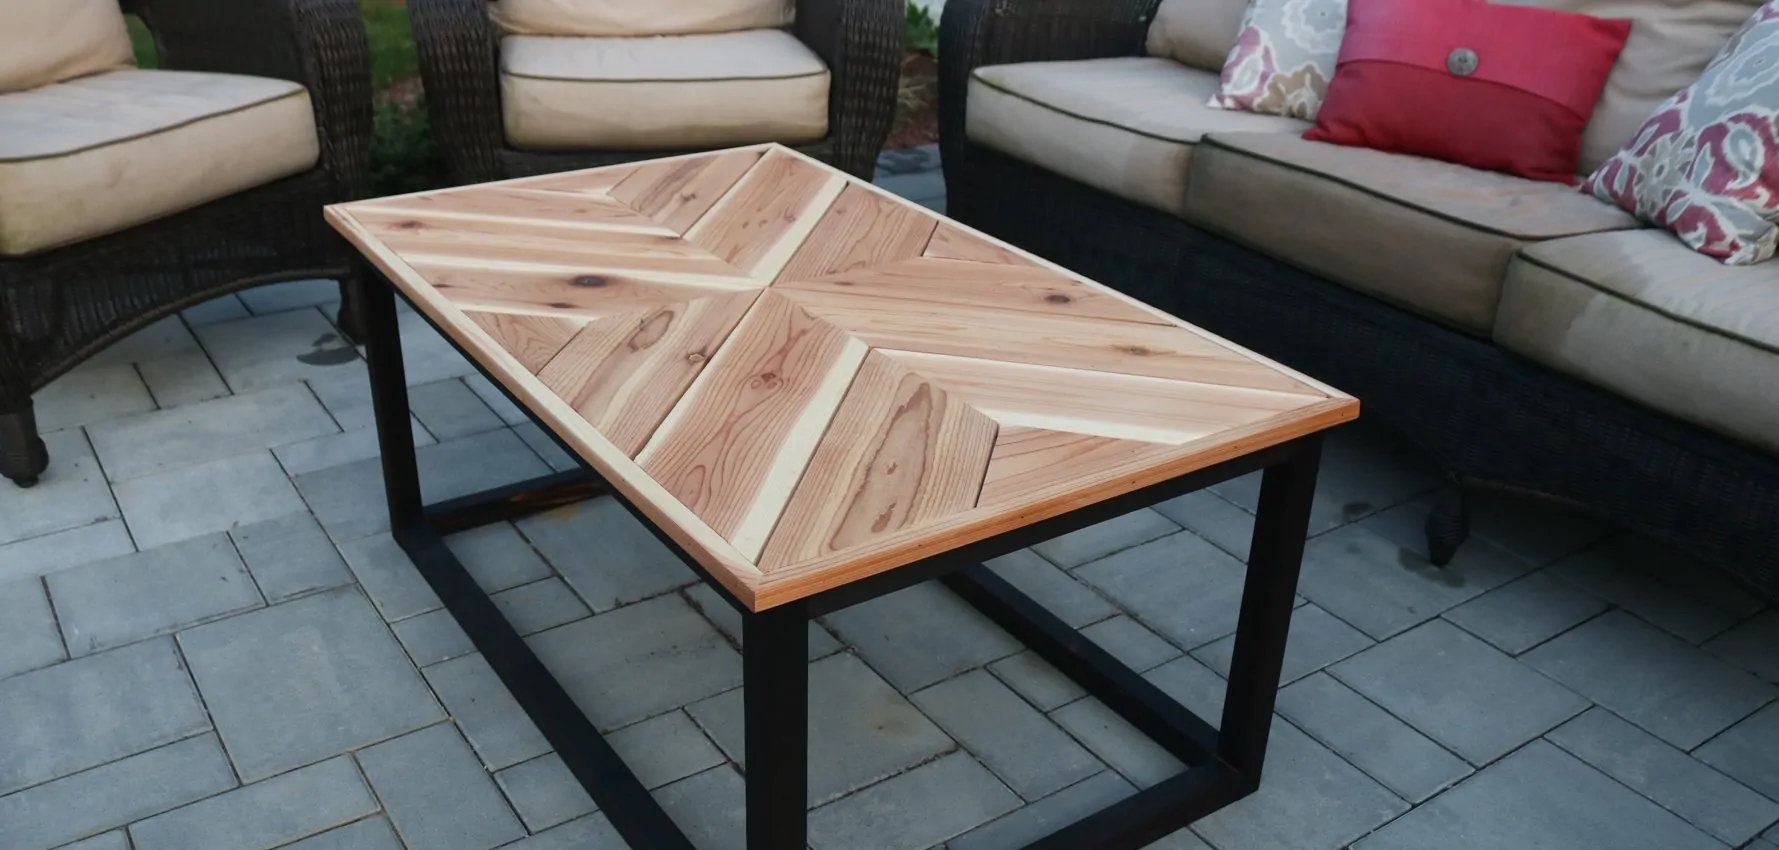 DIY garden table with chevron patterns